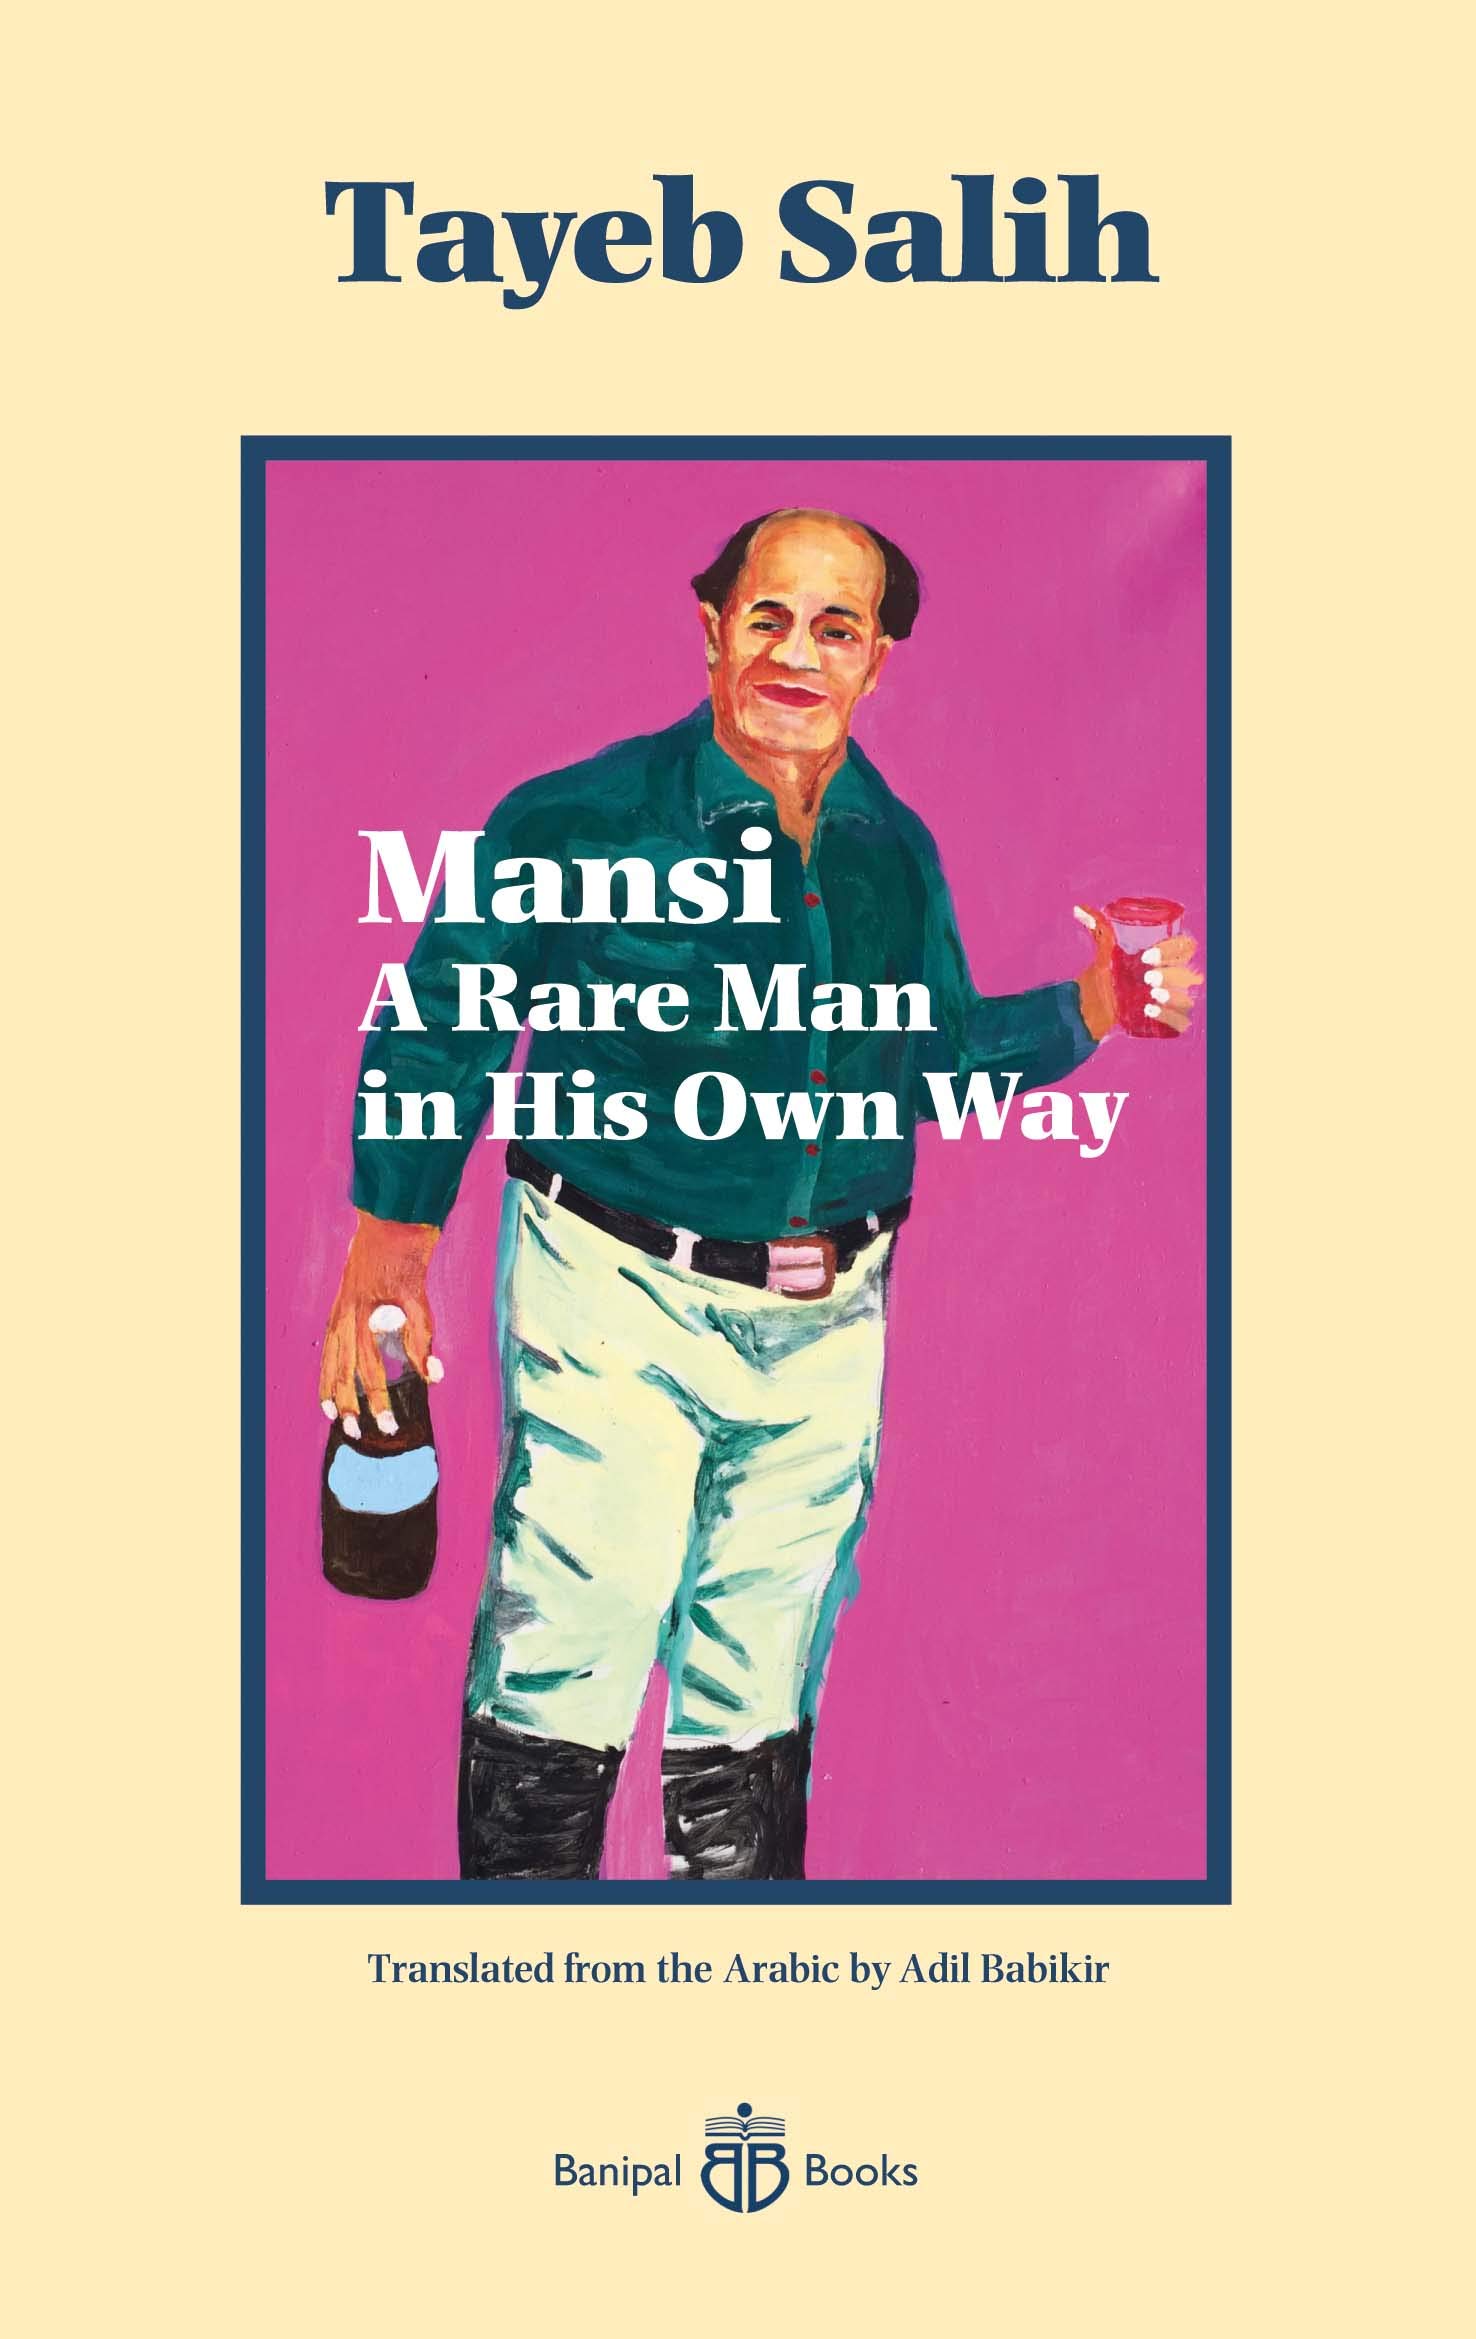 Mansi: A Rare Man in his Own Way